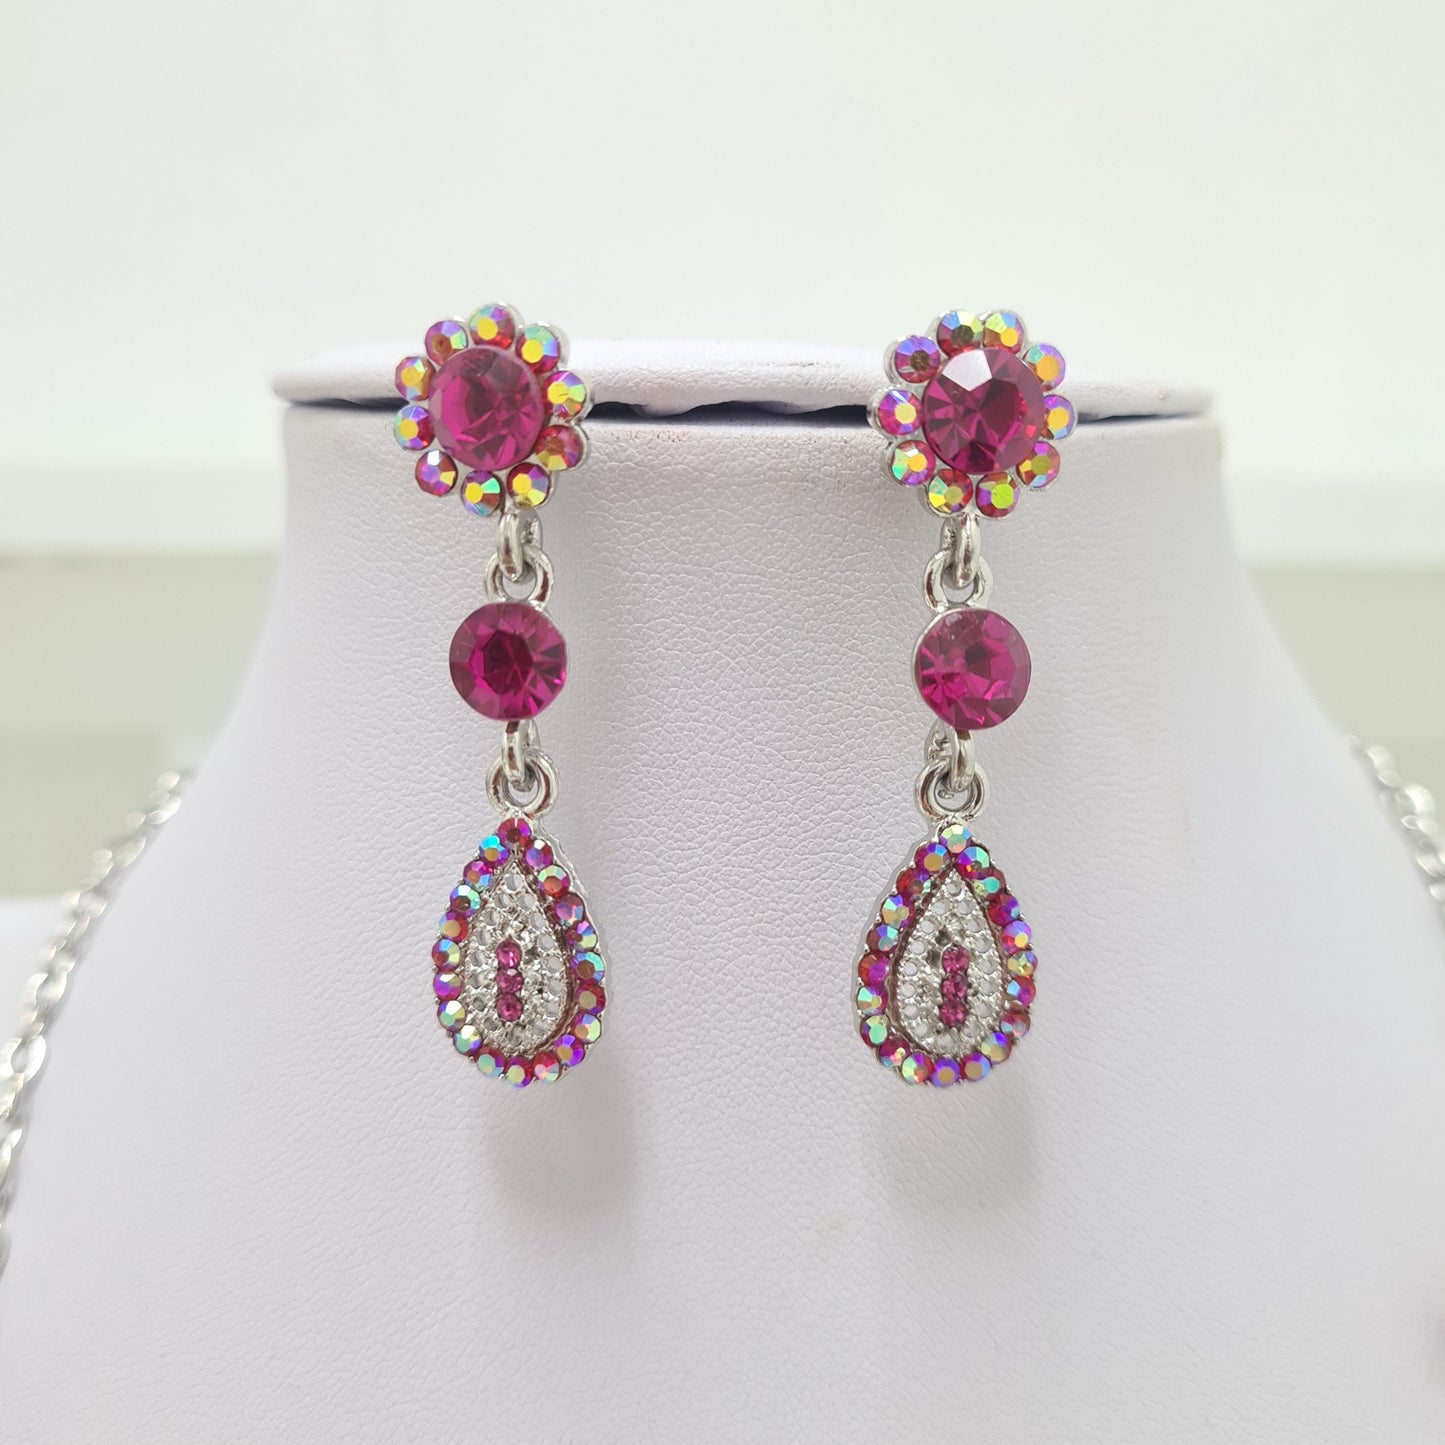 Sparkling Pink Necklace Earring Set